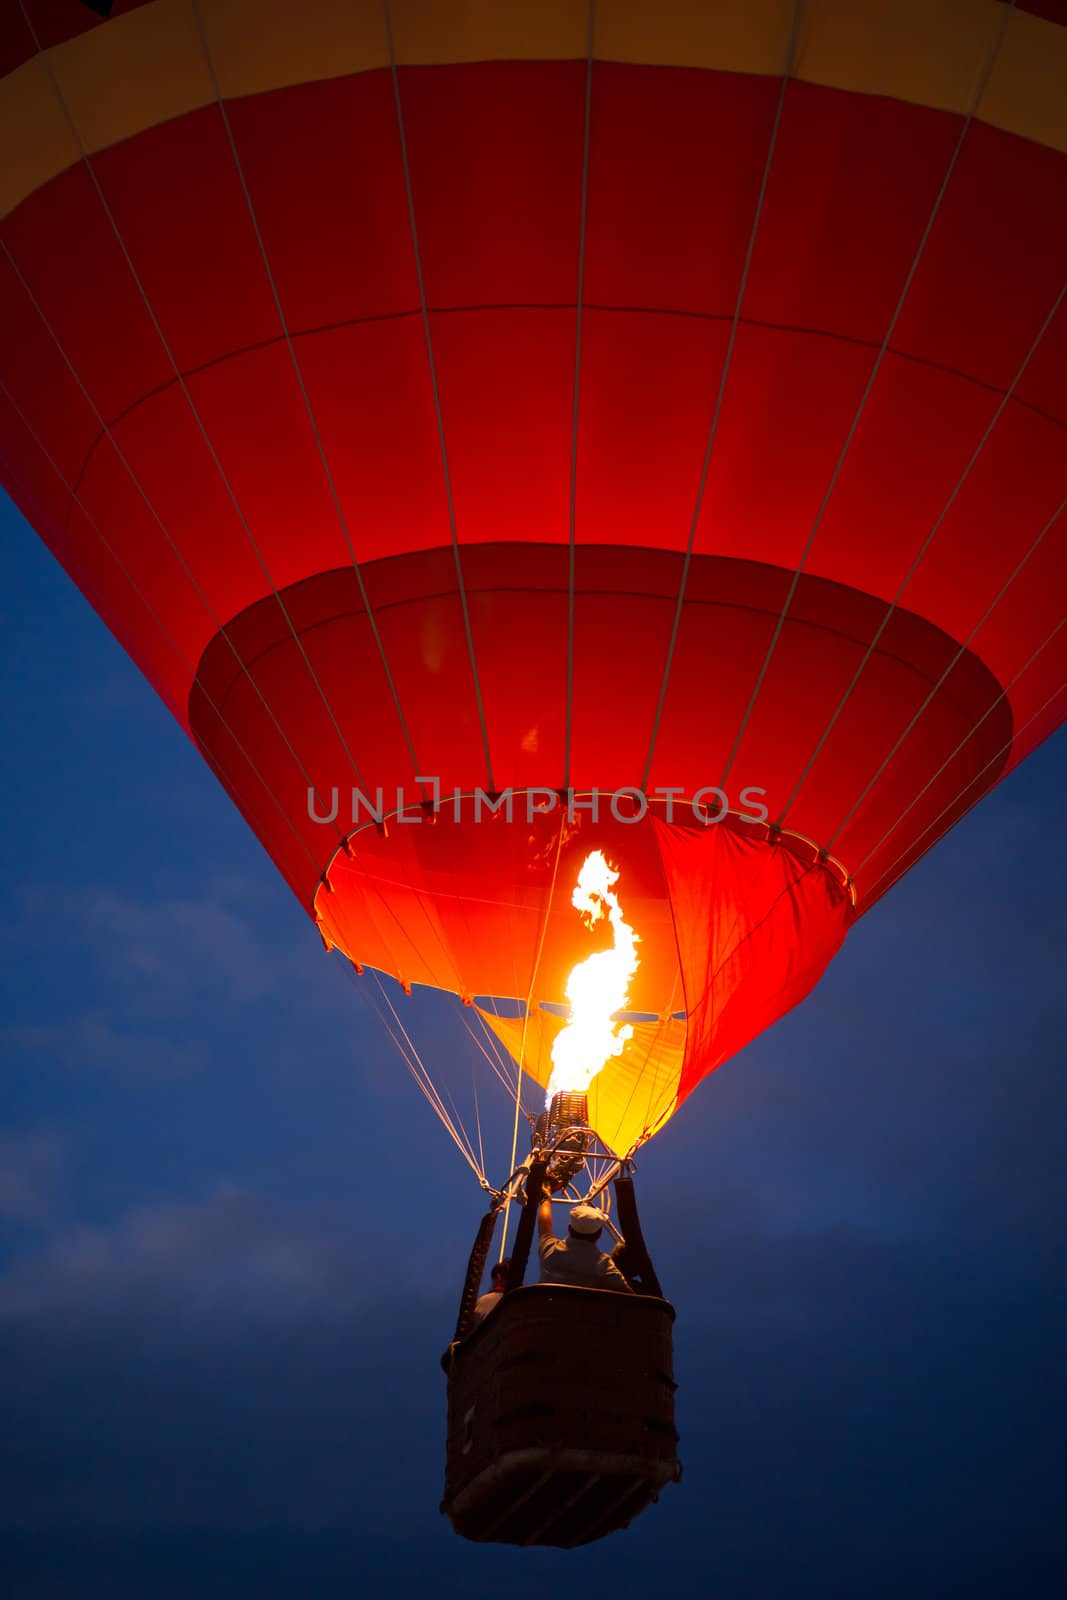 Air balloon by timbrk